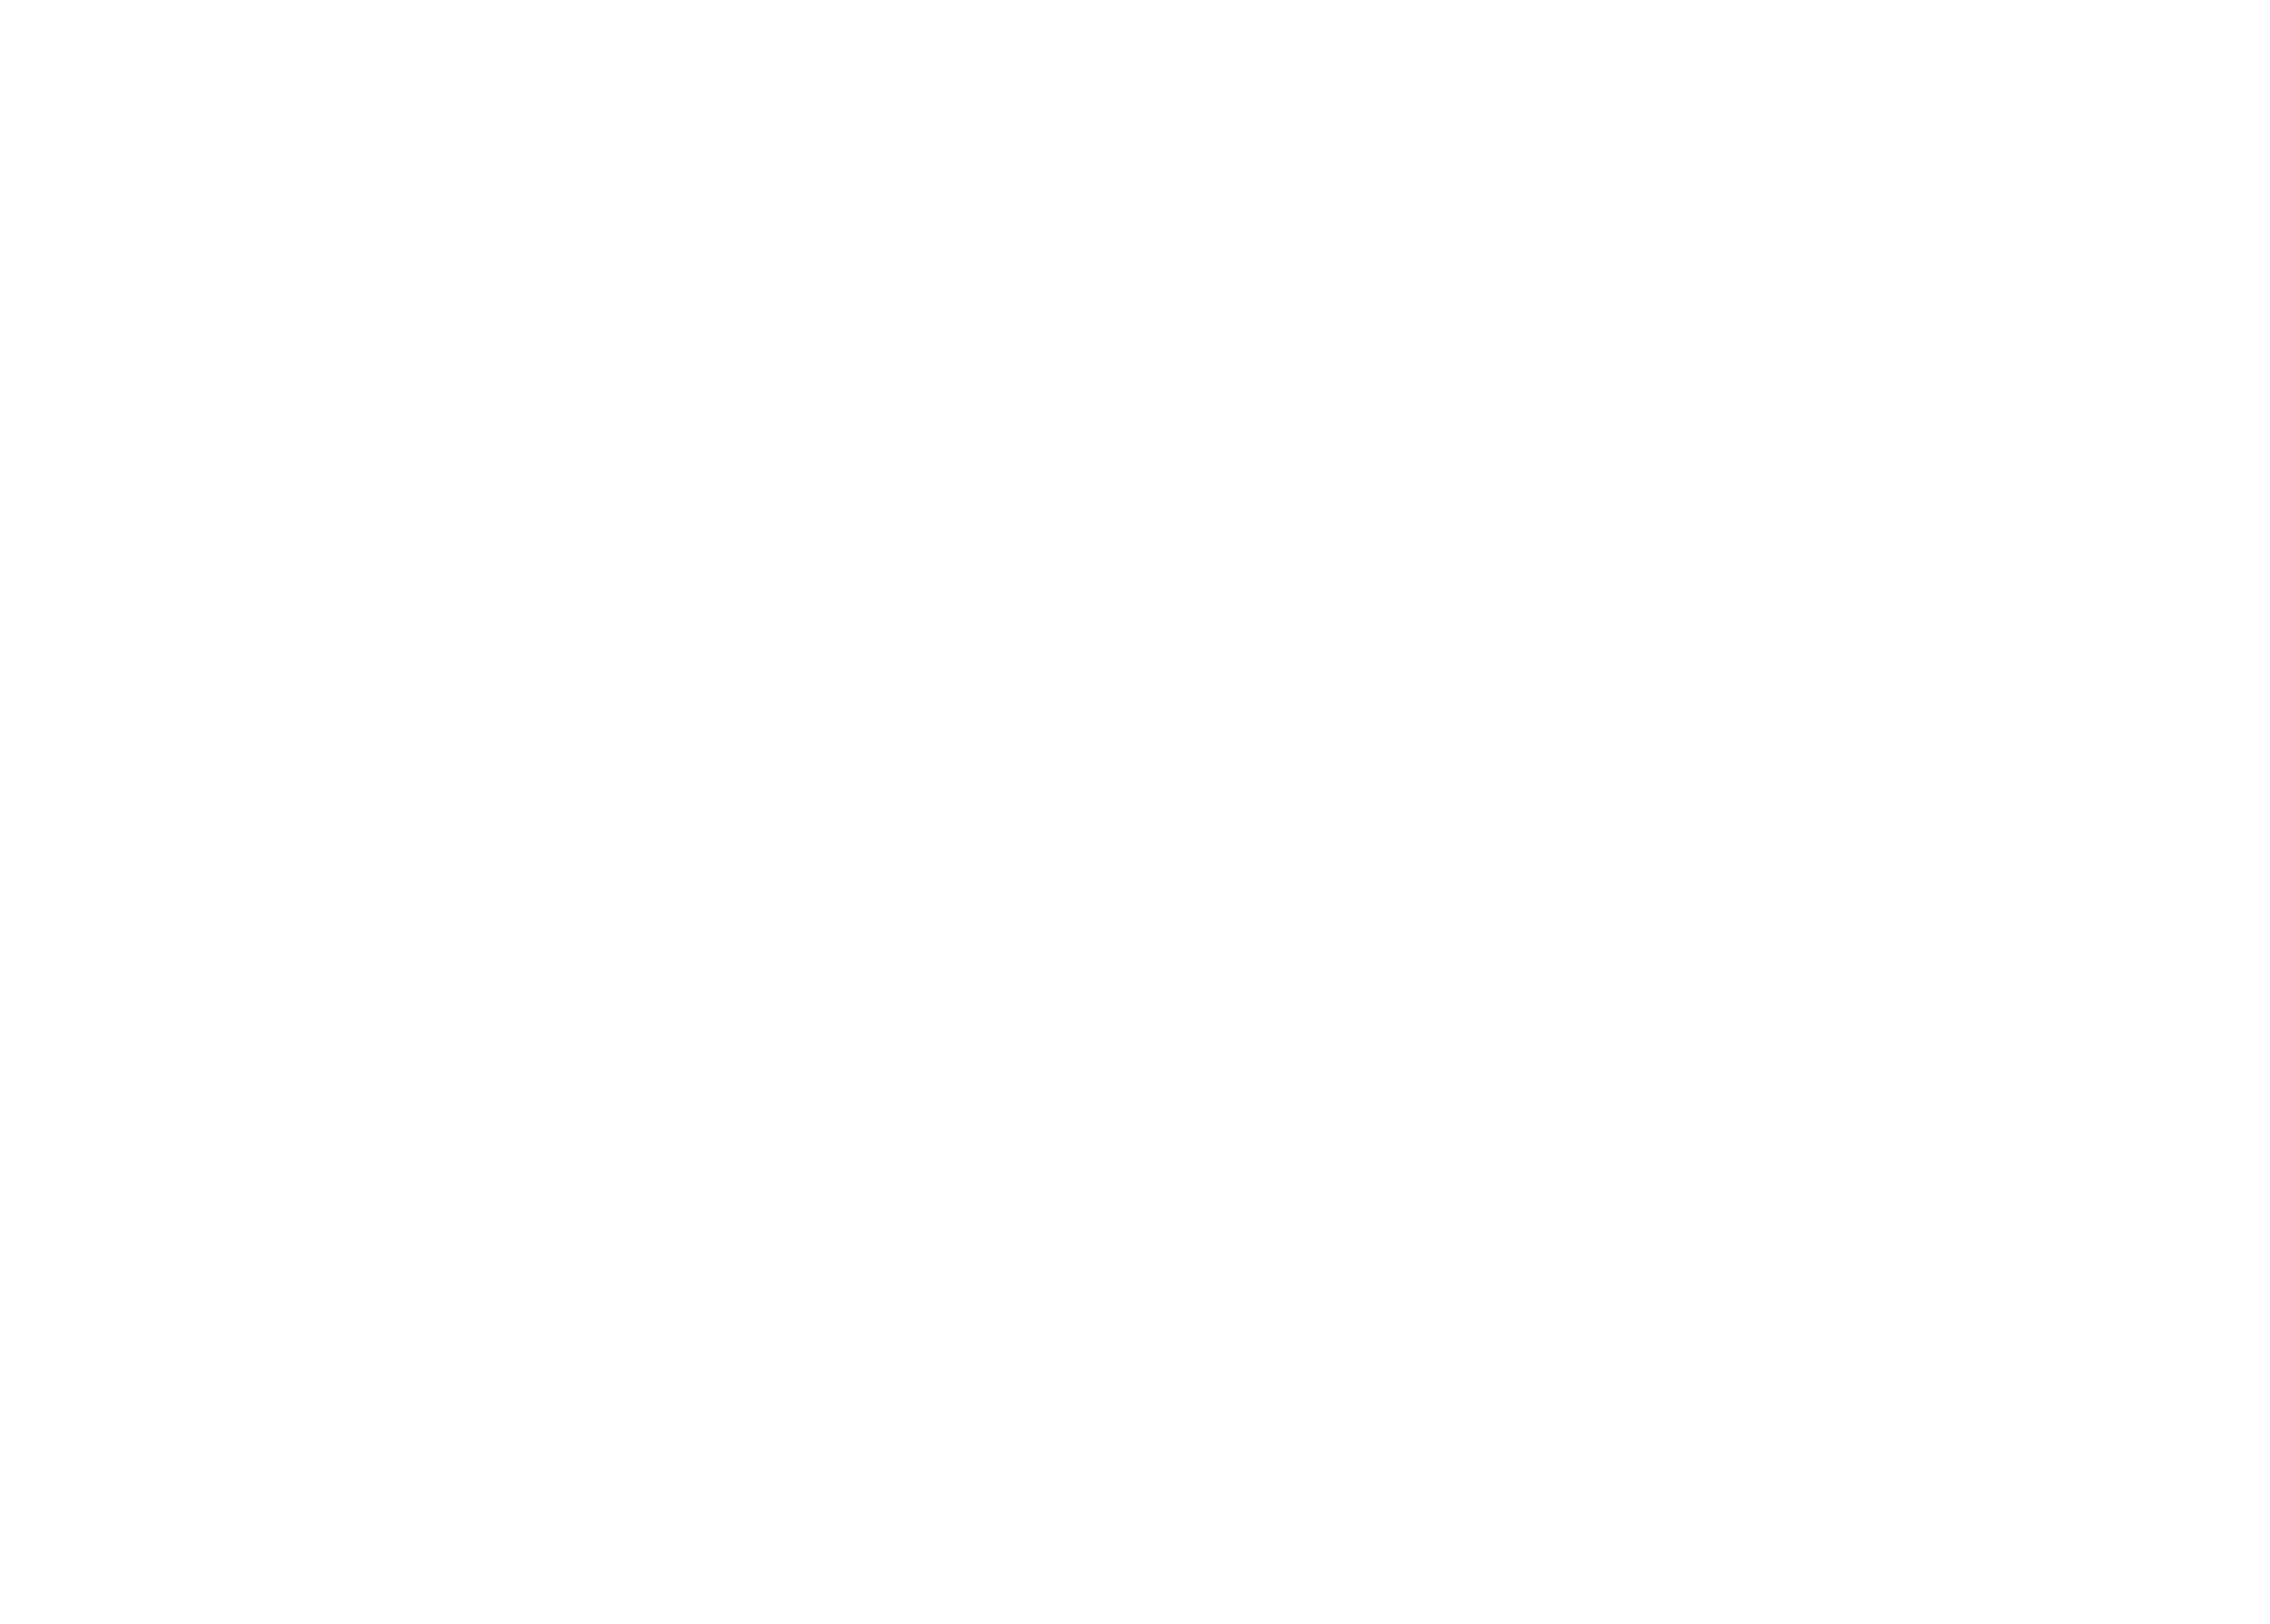 MoonScan